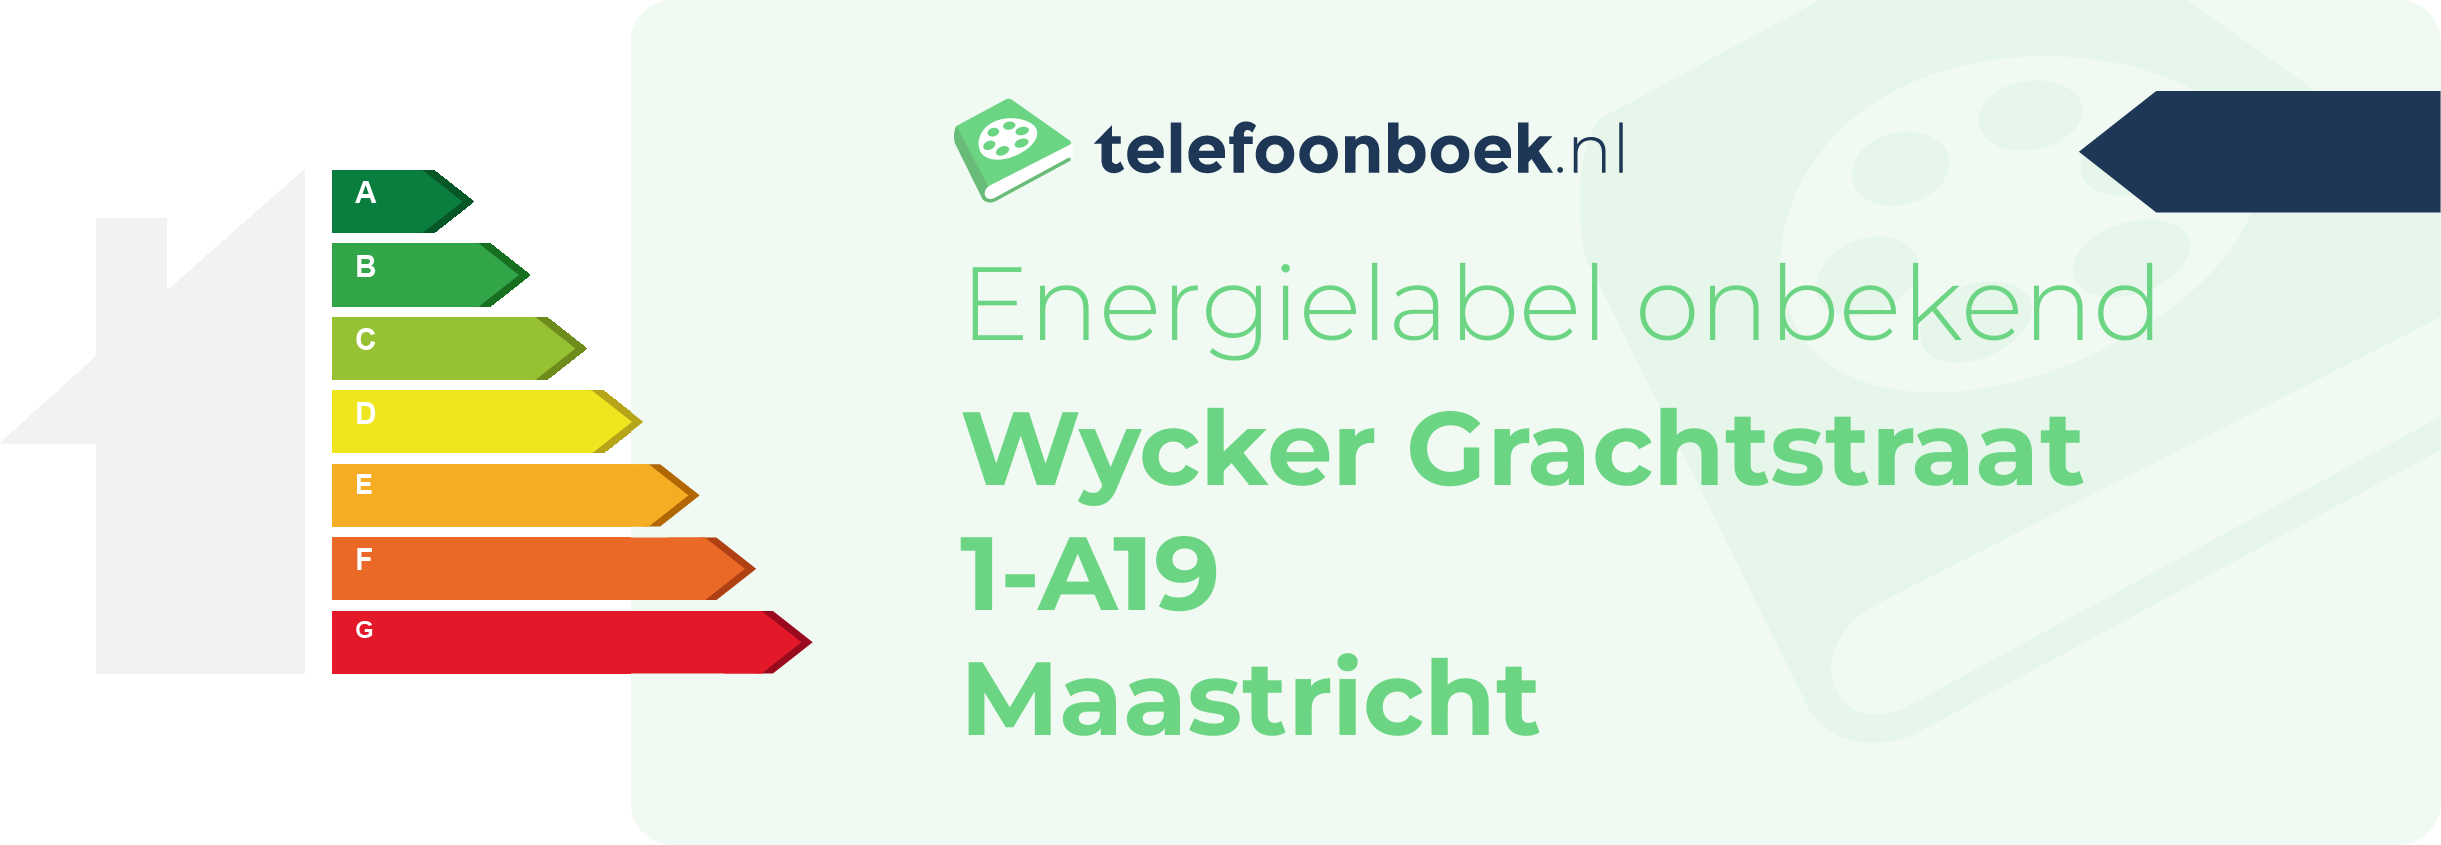 Energielabel Wycker Grachtstraat 1-A19 Maastricht